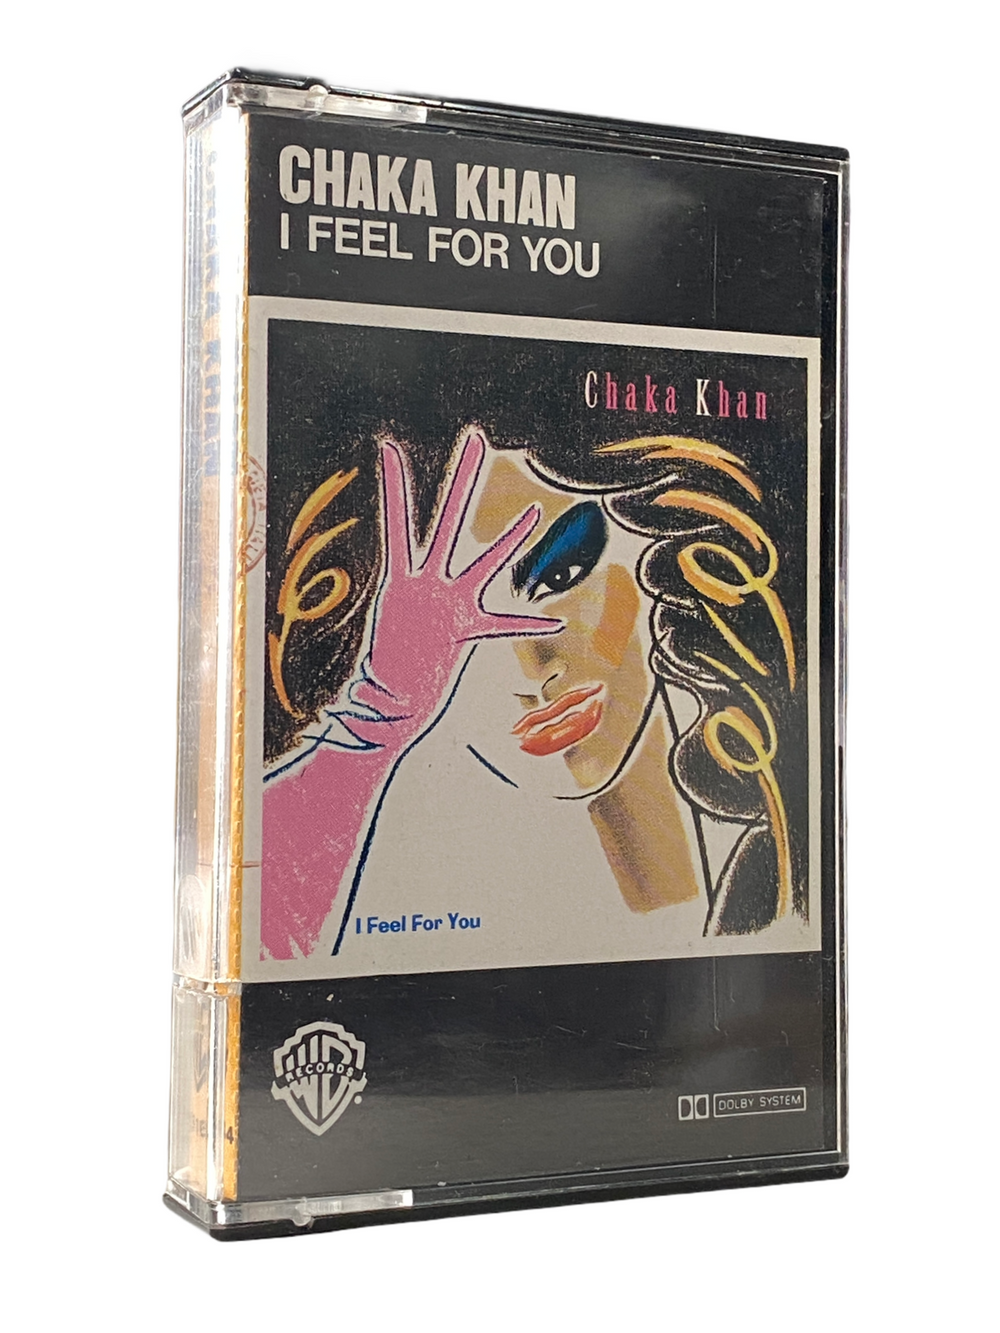 Prince – Chaka Khan I Feel For You Original Cassette Tape Spain 1984 Release Prince